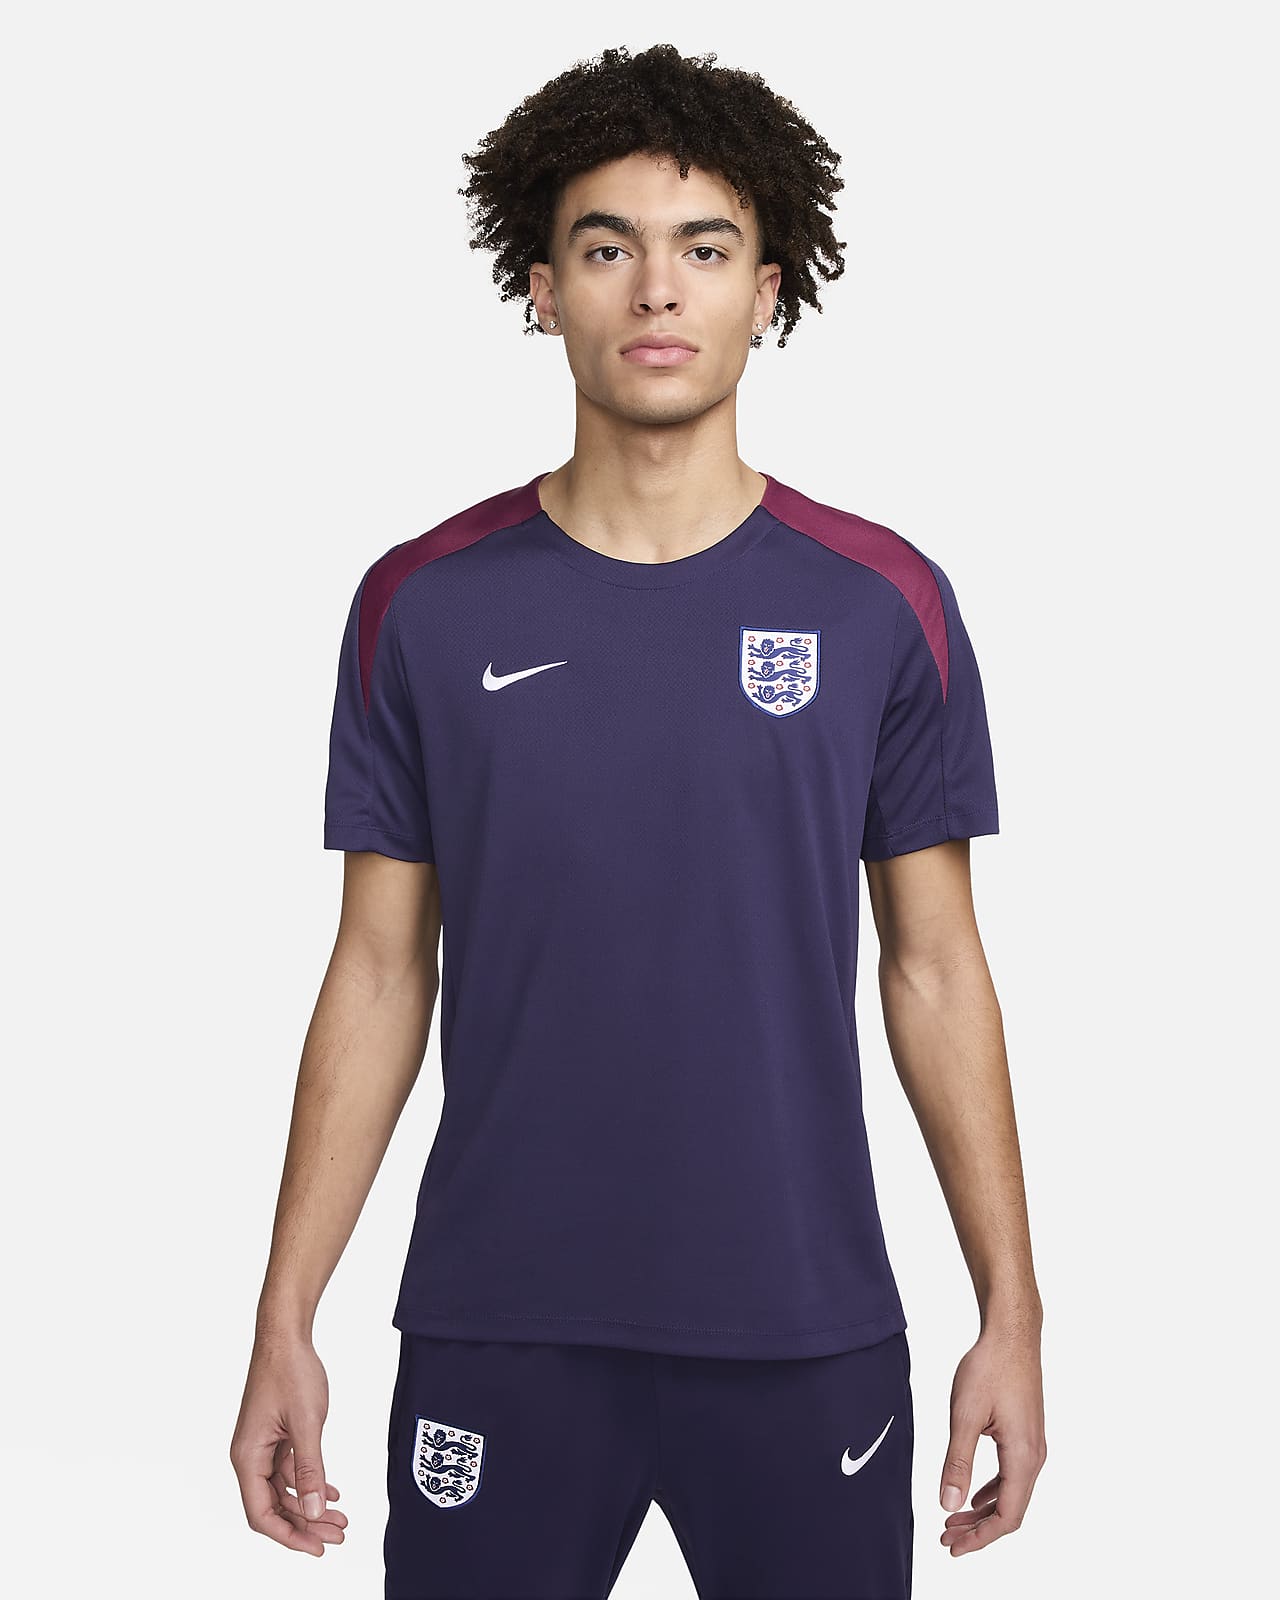 Anglia Strike Nike Dri-FIT rövid ujjú, kötött férfi futballfelső